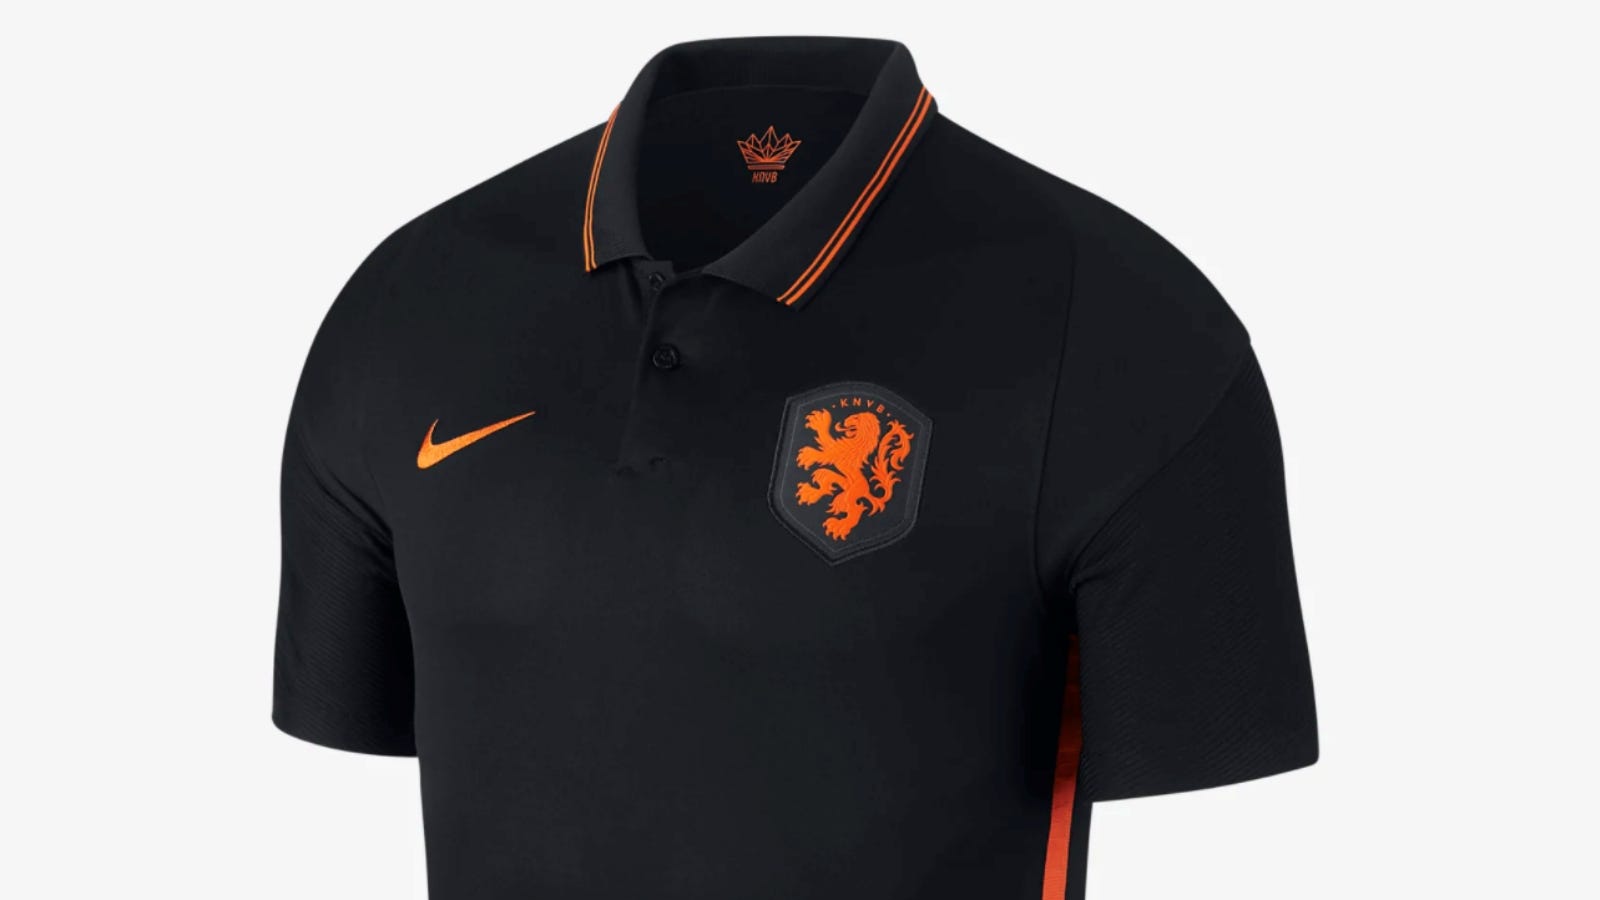 Netherlands 2020 Euro away kit